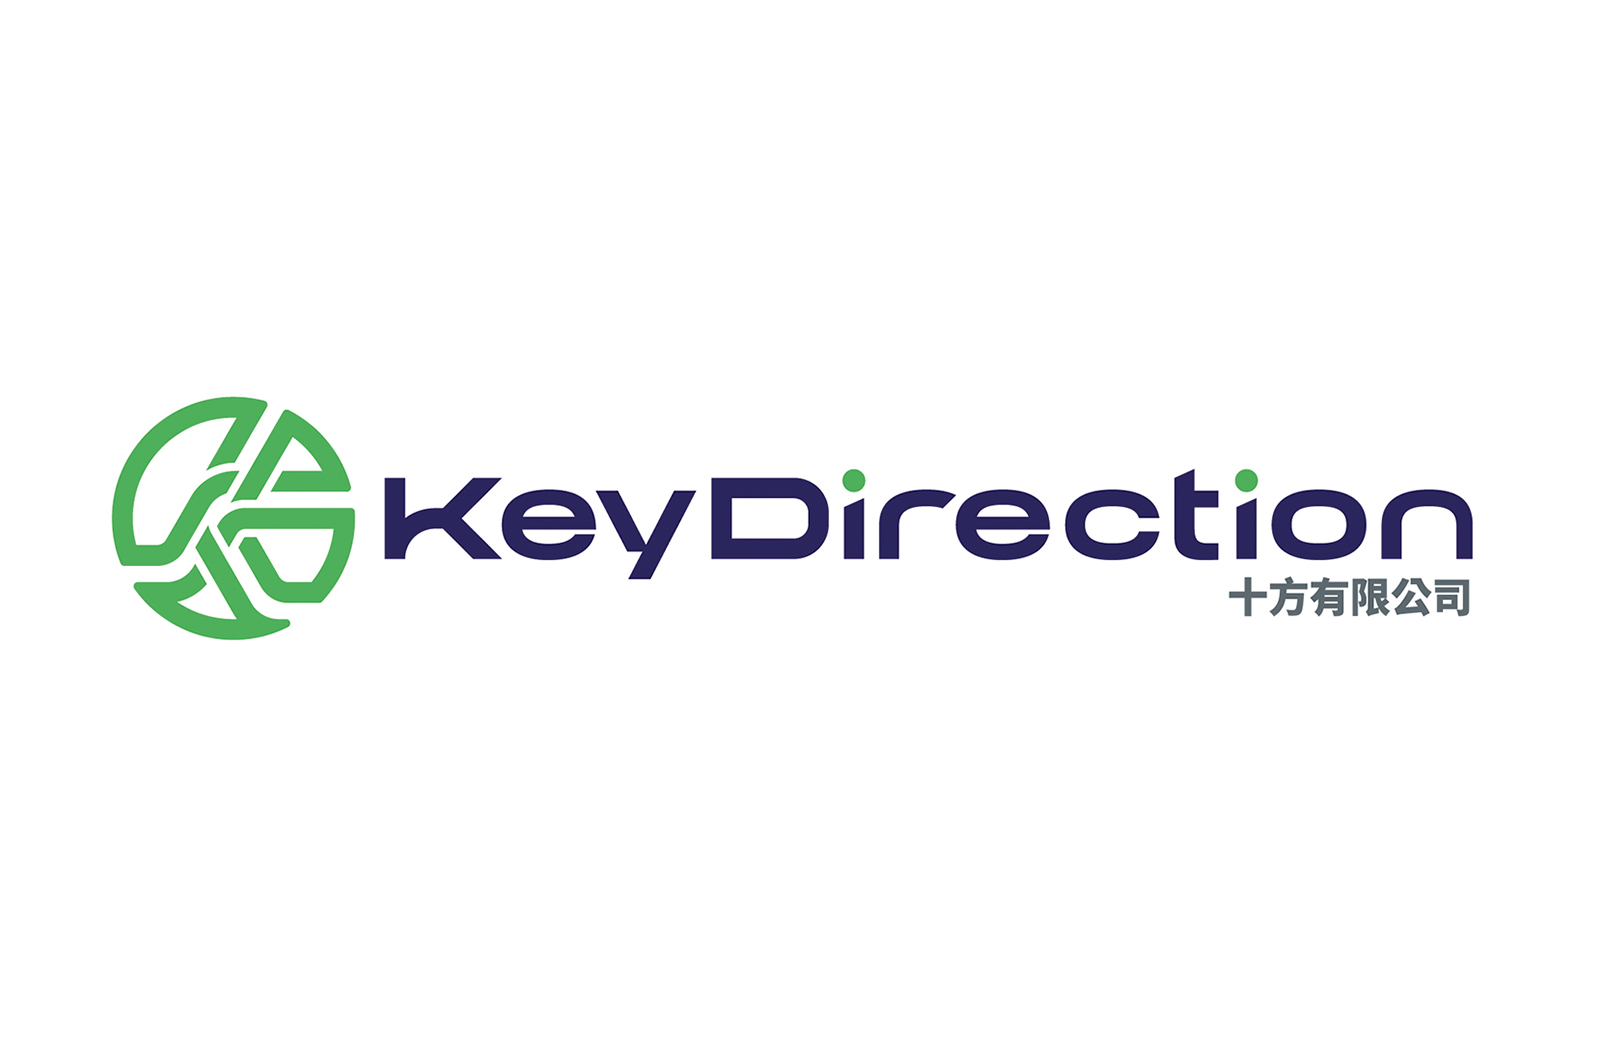 Key Direction